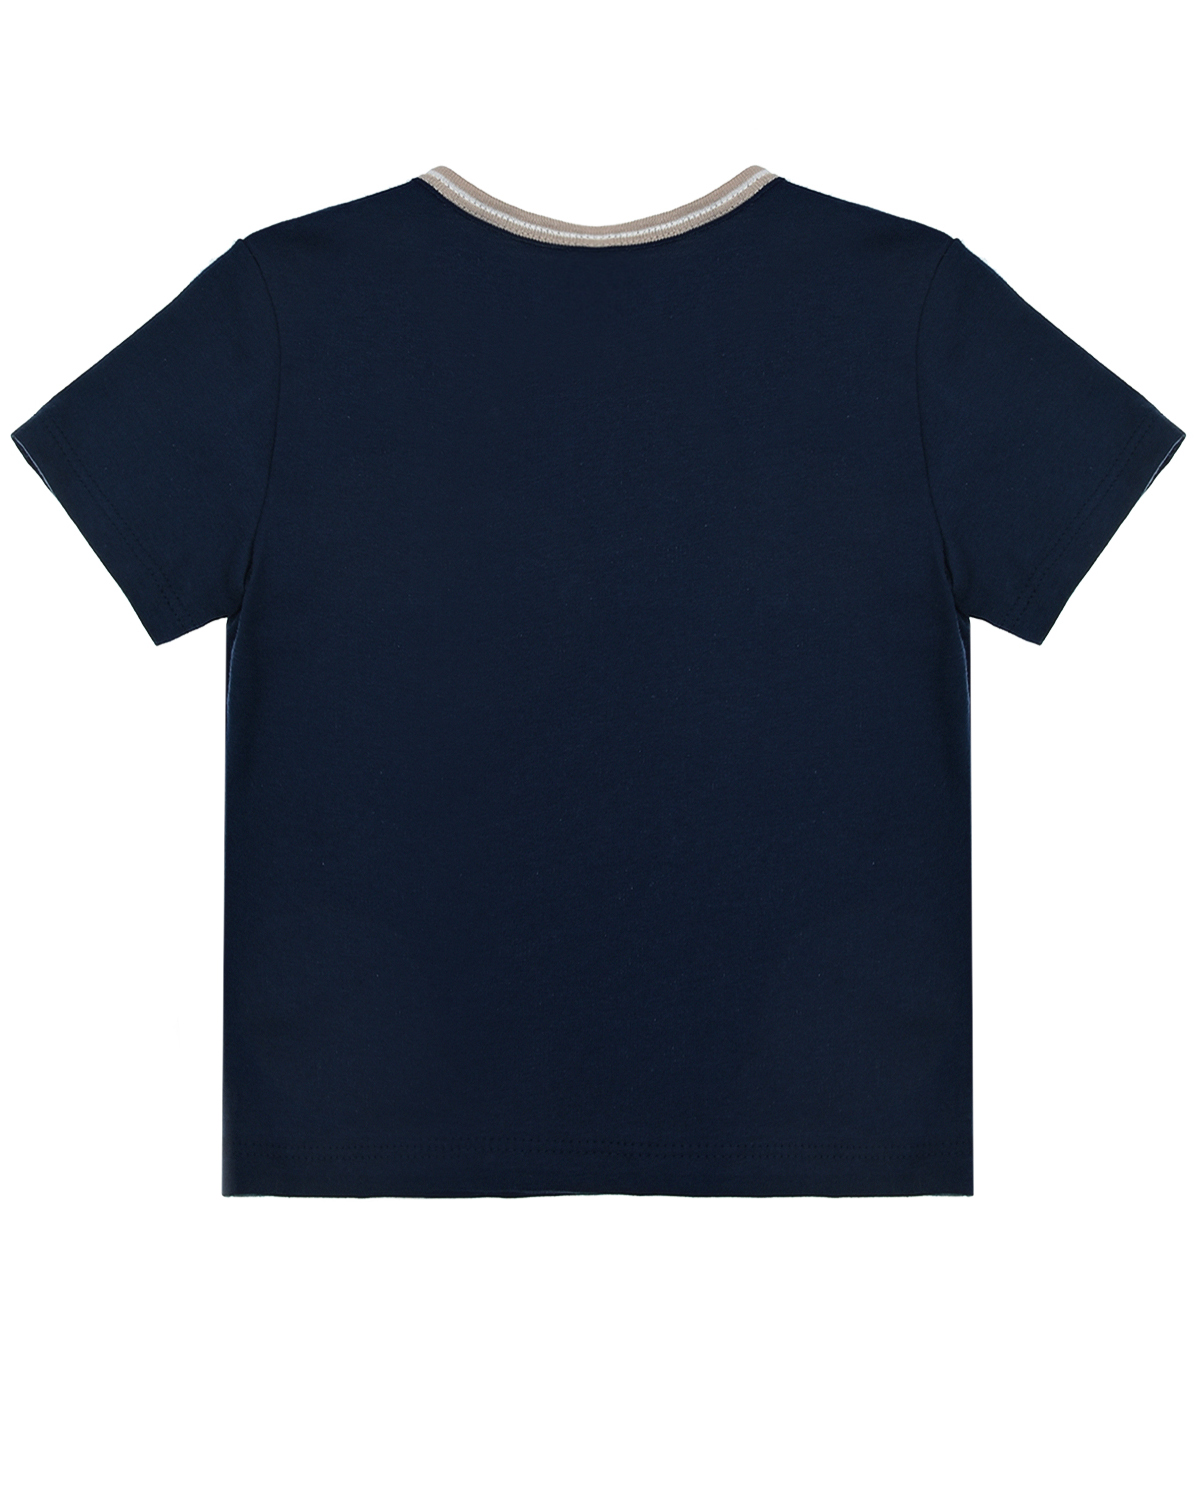 Синяя футболка с вышивкой "теннисист" Sanetta fiftyseven детская, размер 68, цвет синий - фото 2